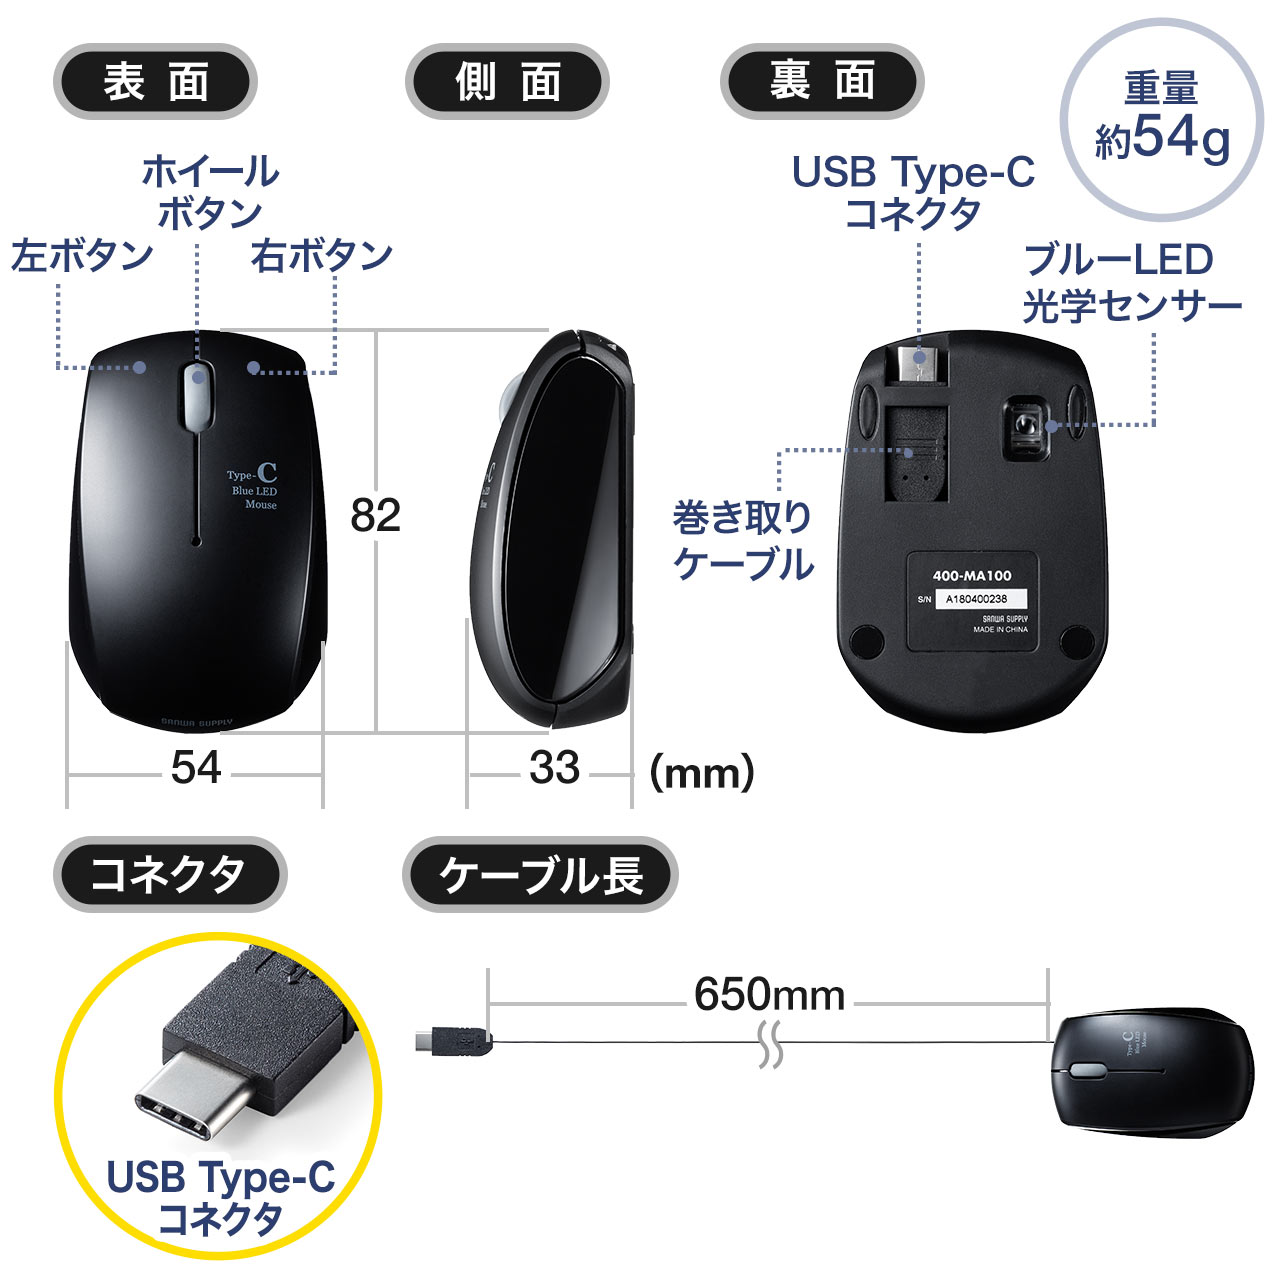 L}EX USB Type-C 莮 u[LEDZT[ RpNg 3{^ ubN 400-MA100